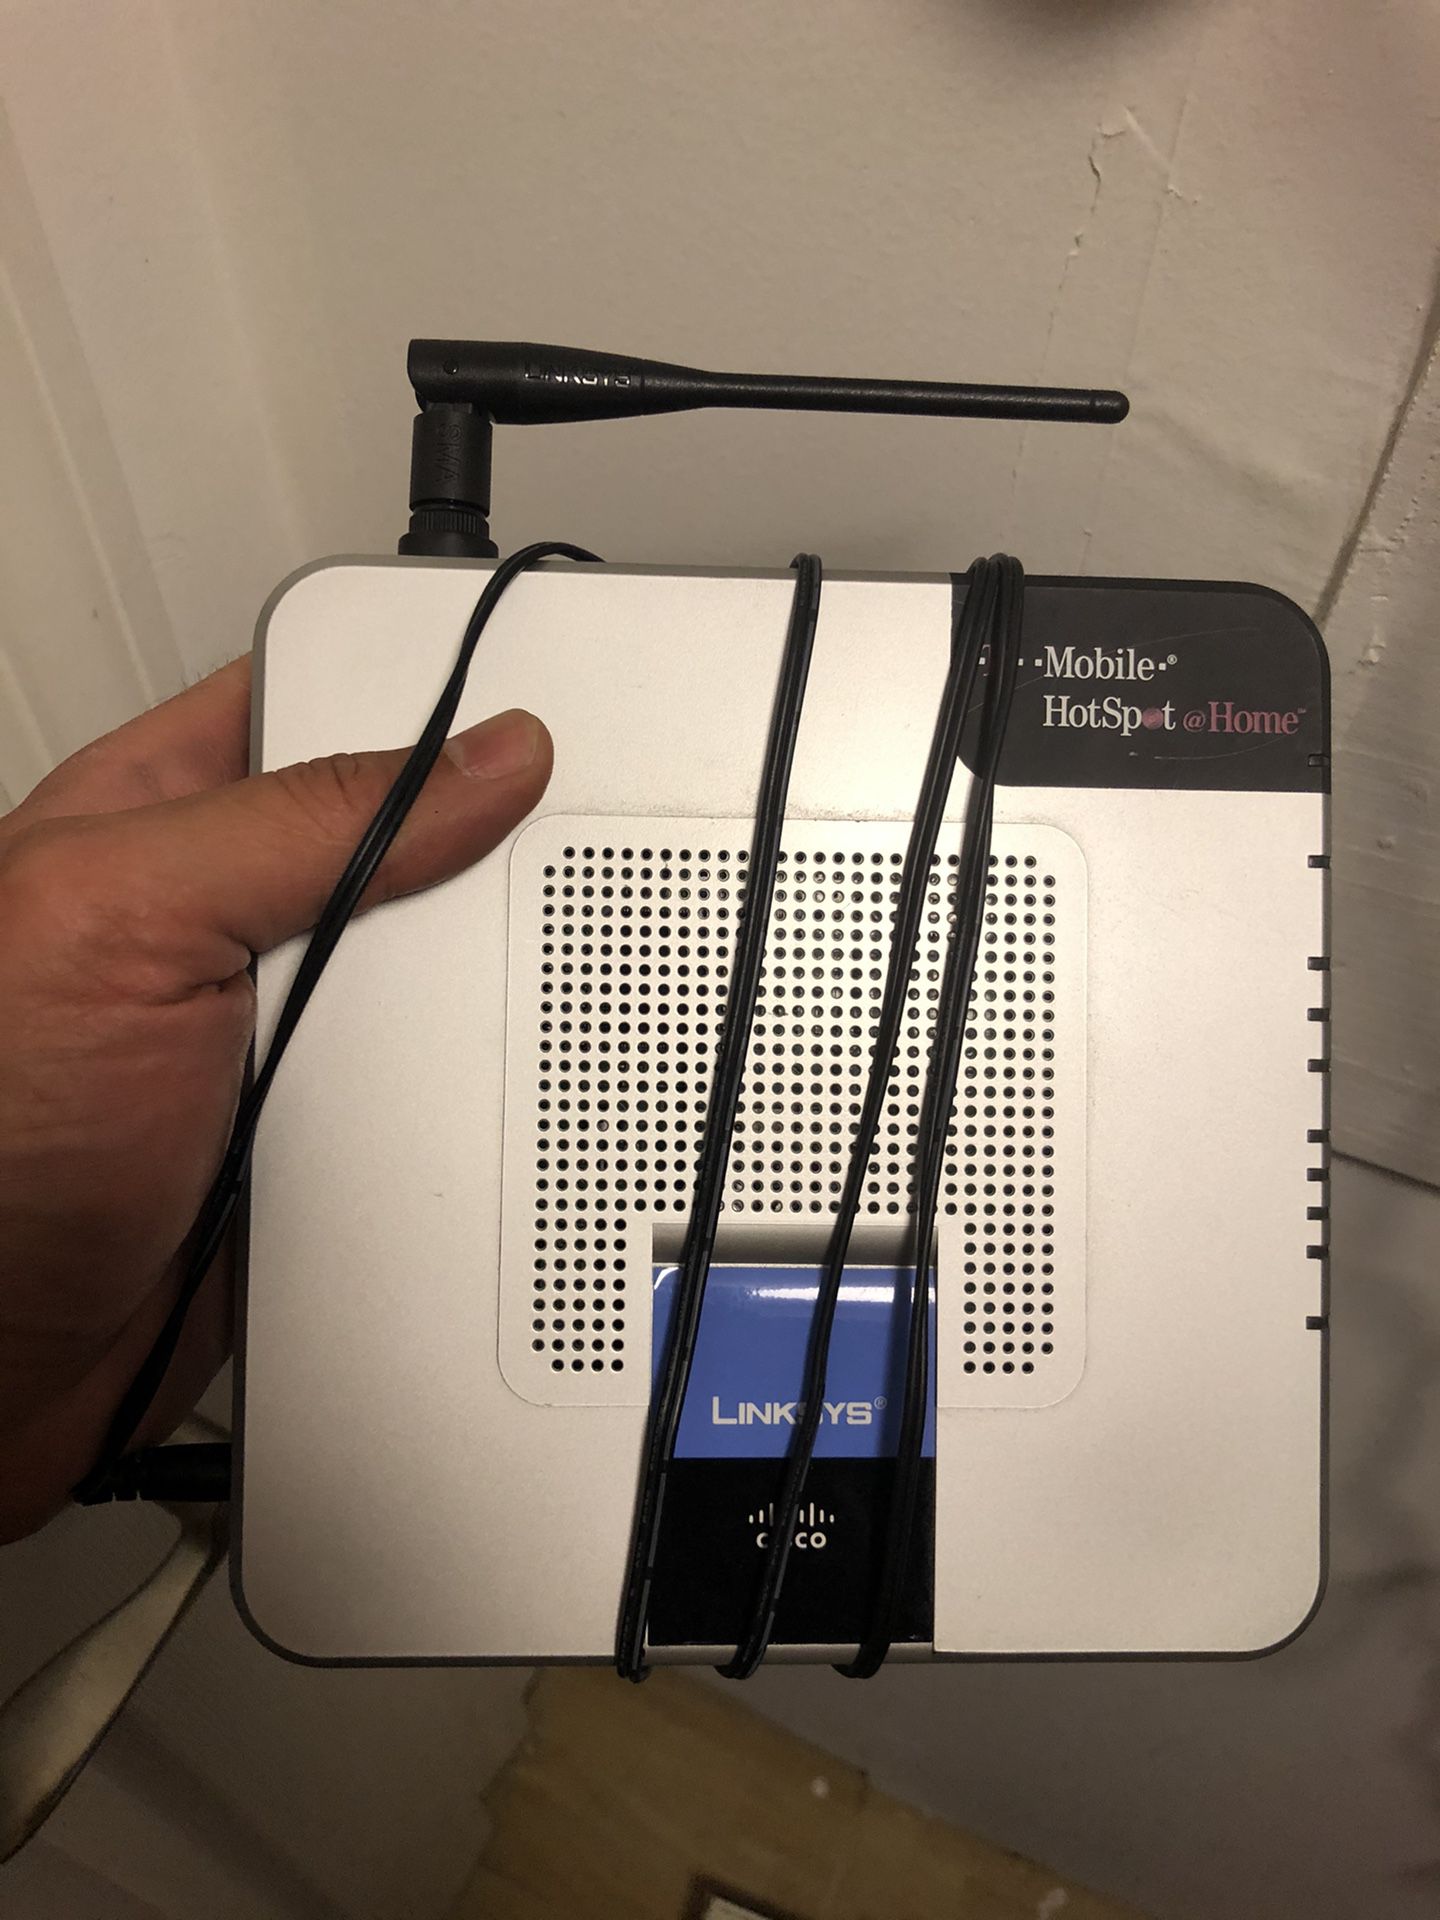 TMobile Linksys router